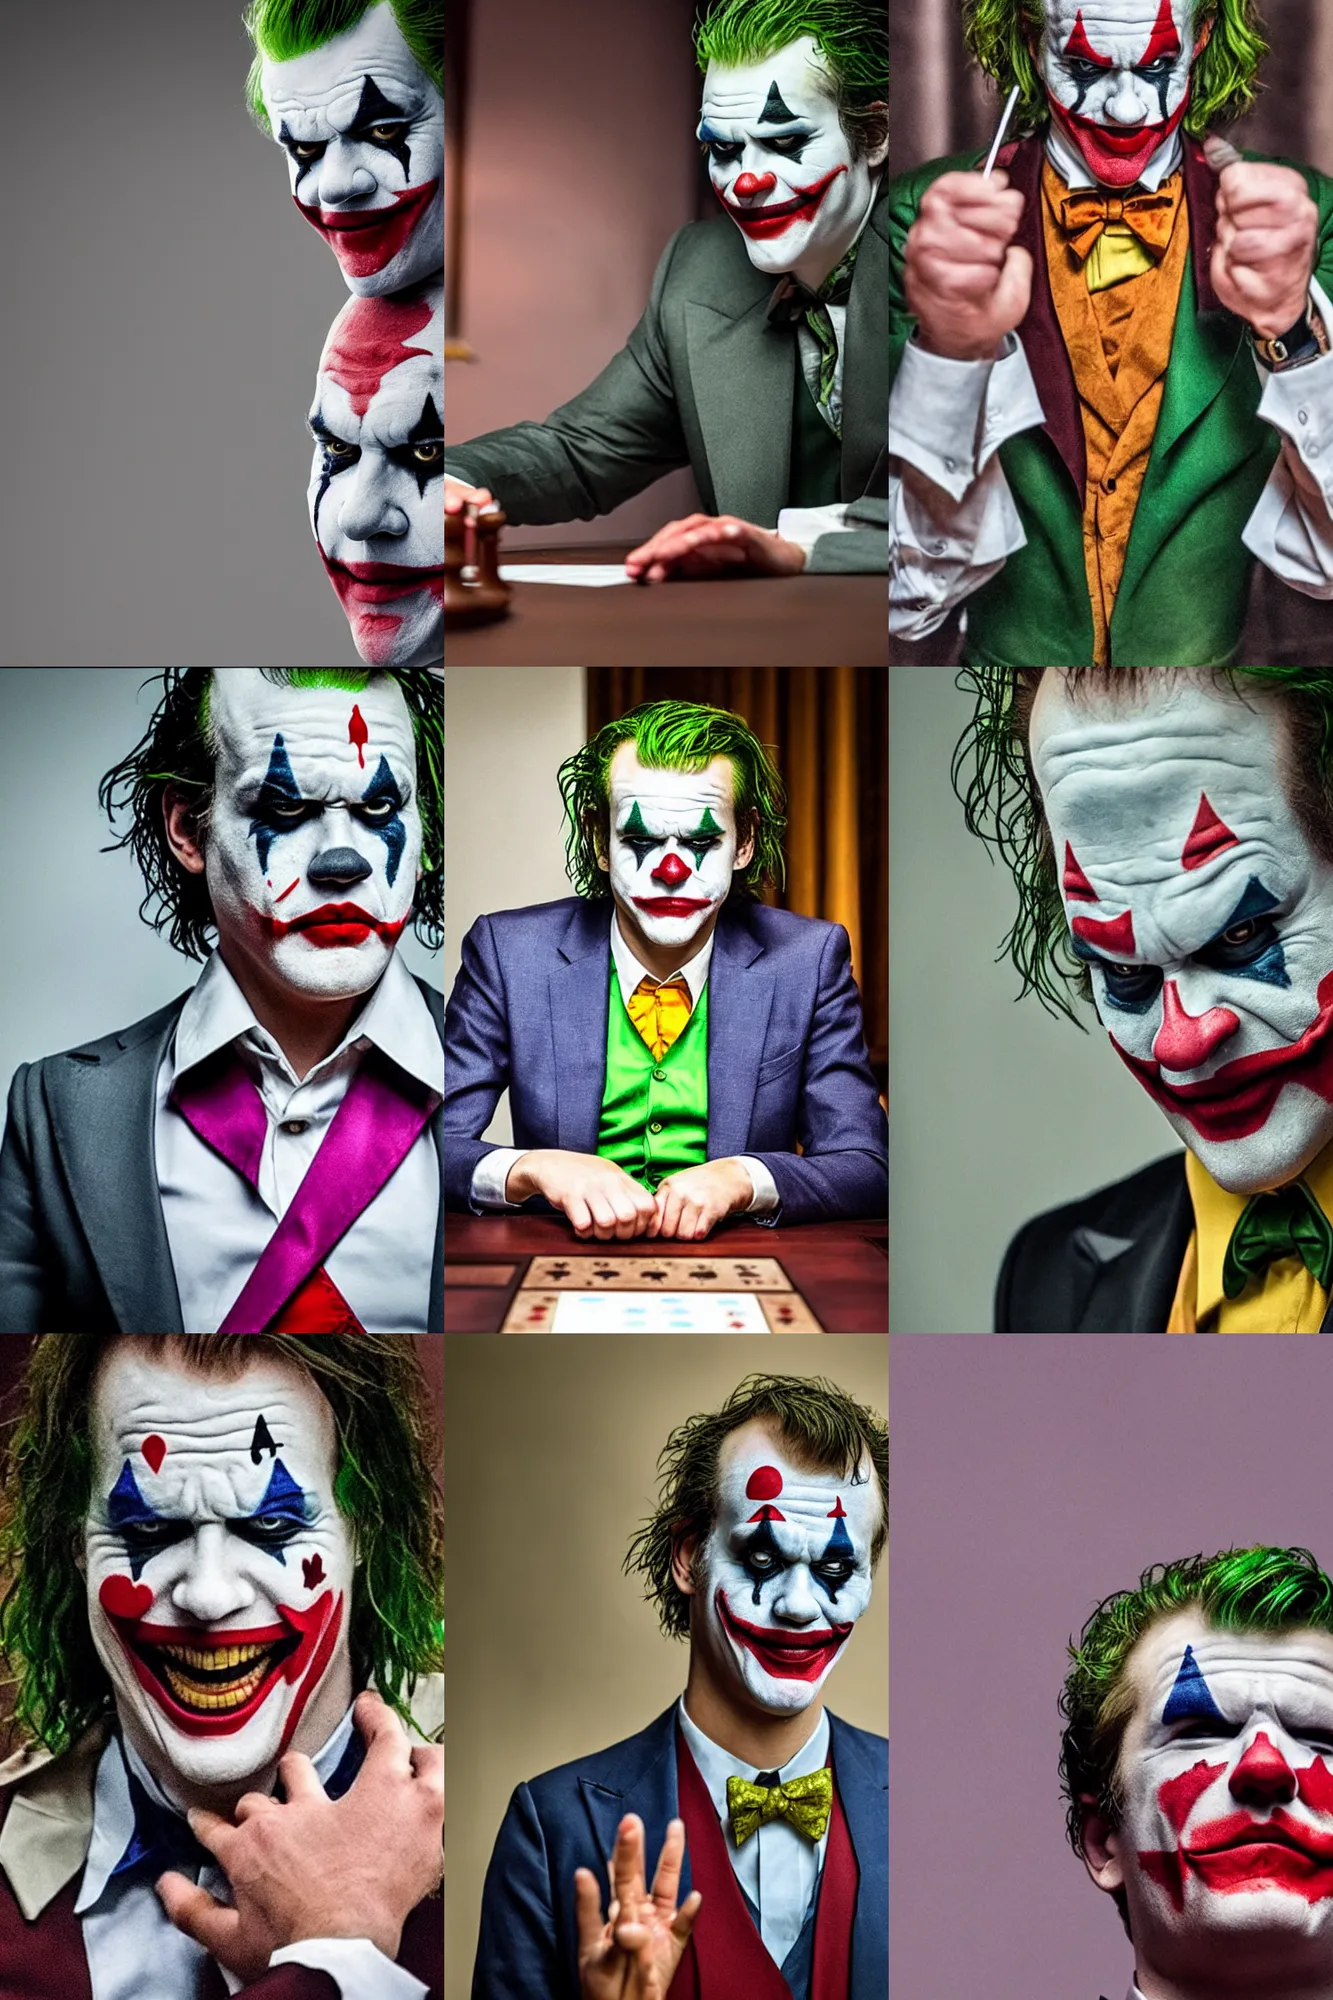 Prompt: Magnus Carlsen in Joker (2019)